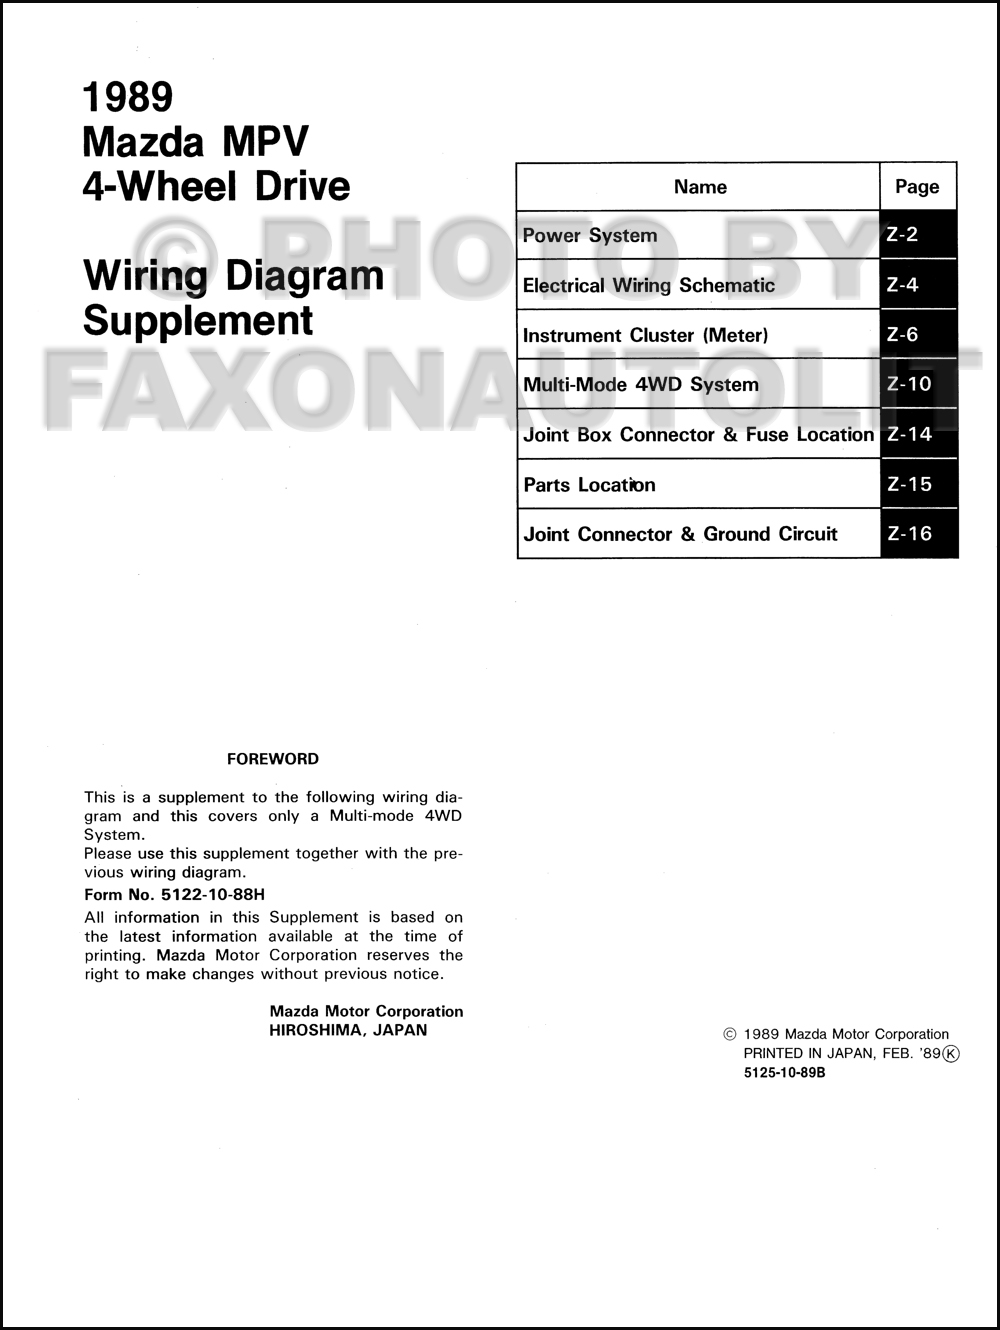 1989 Mazda Mpv Wiring Diagram Manual Original